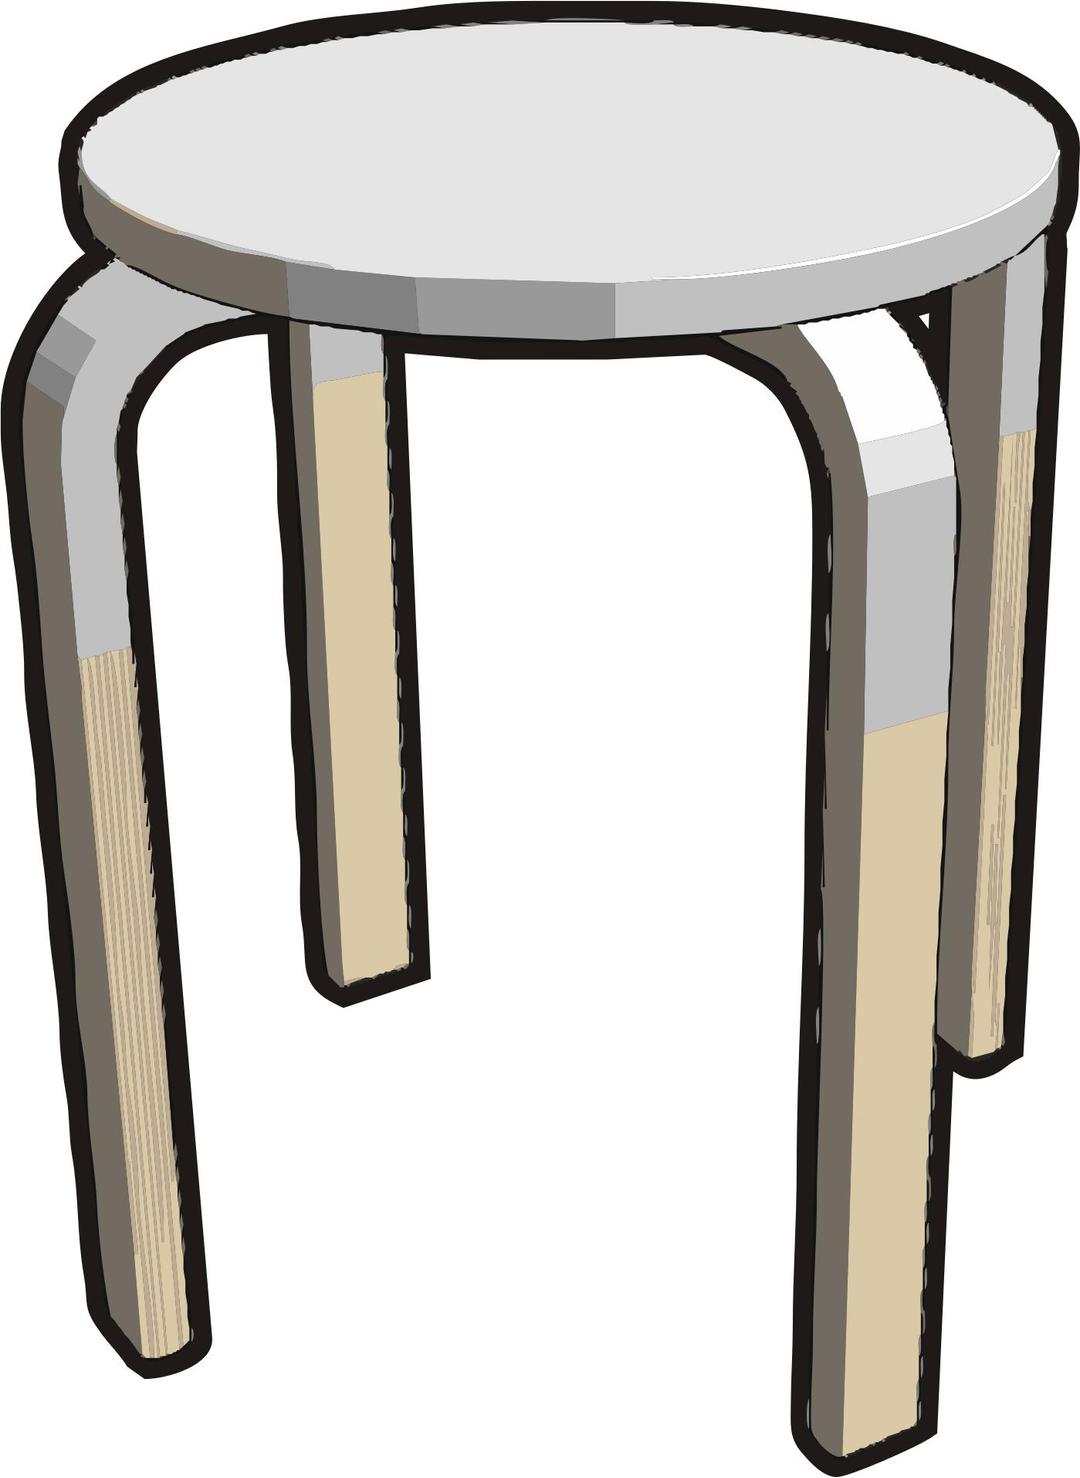 Ikea stuff - Frosta stool, half gray png transparent